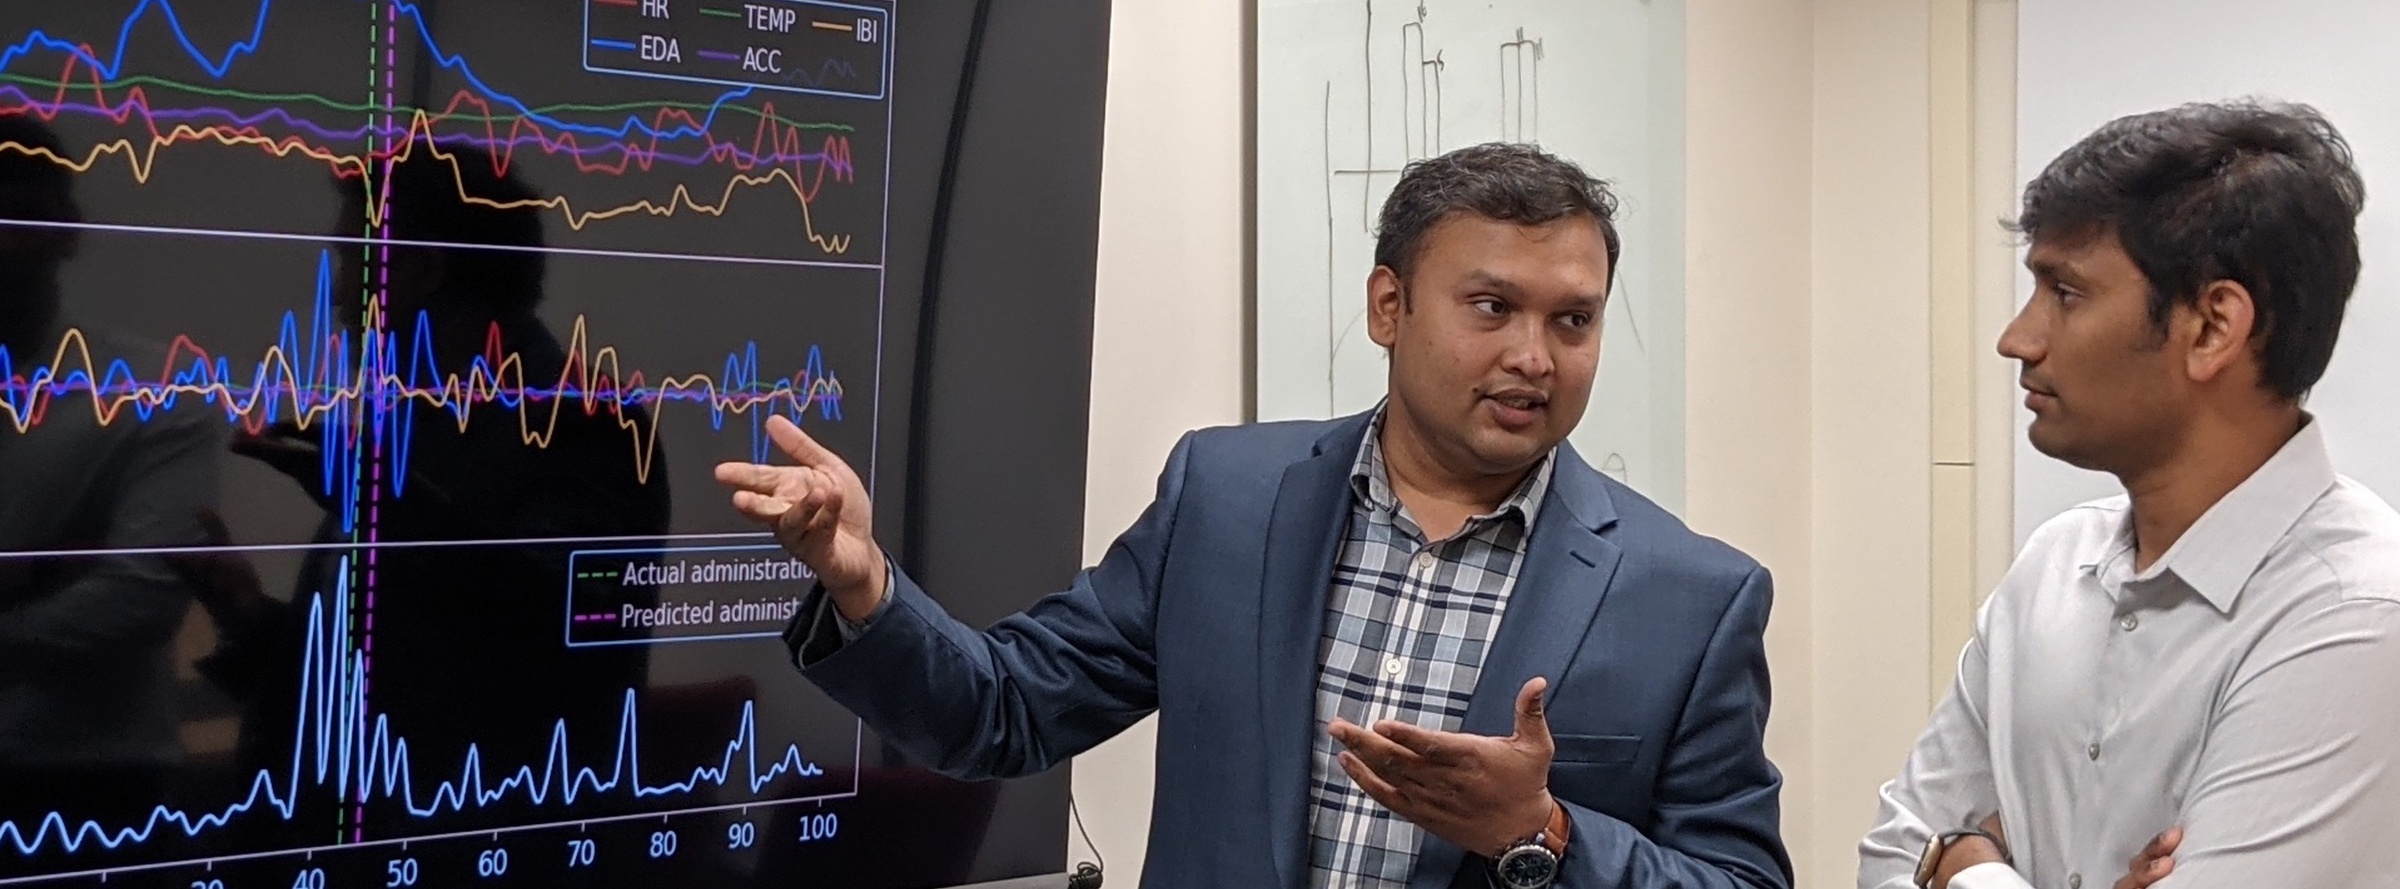 UMass Amherst assistant professor Tauhidur Rahman and Ph.D. student Bhanu Teja Gullapalli discuss their research findings.